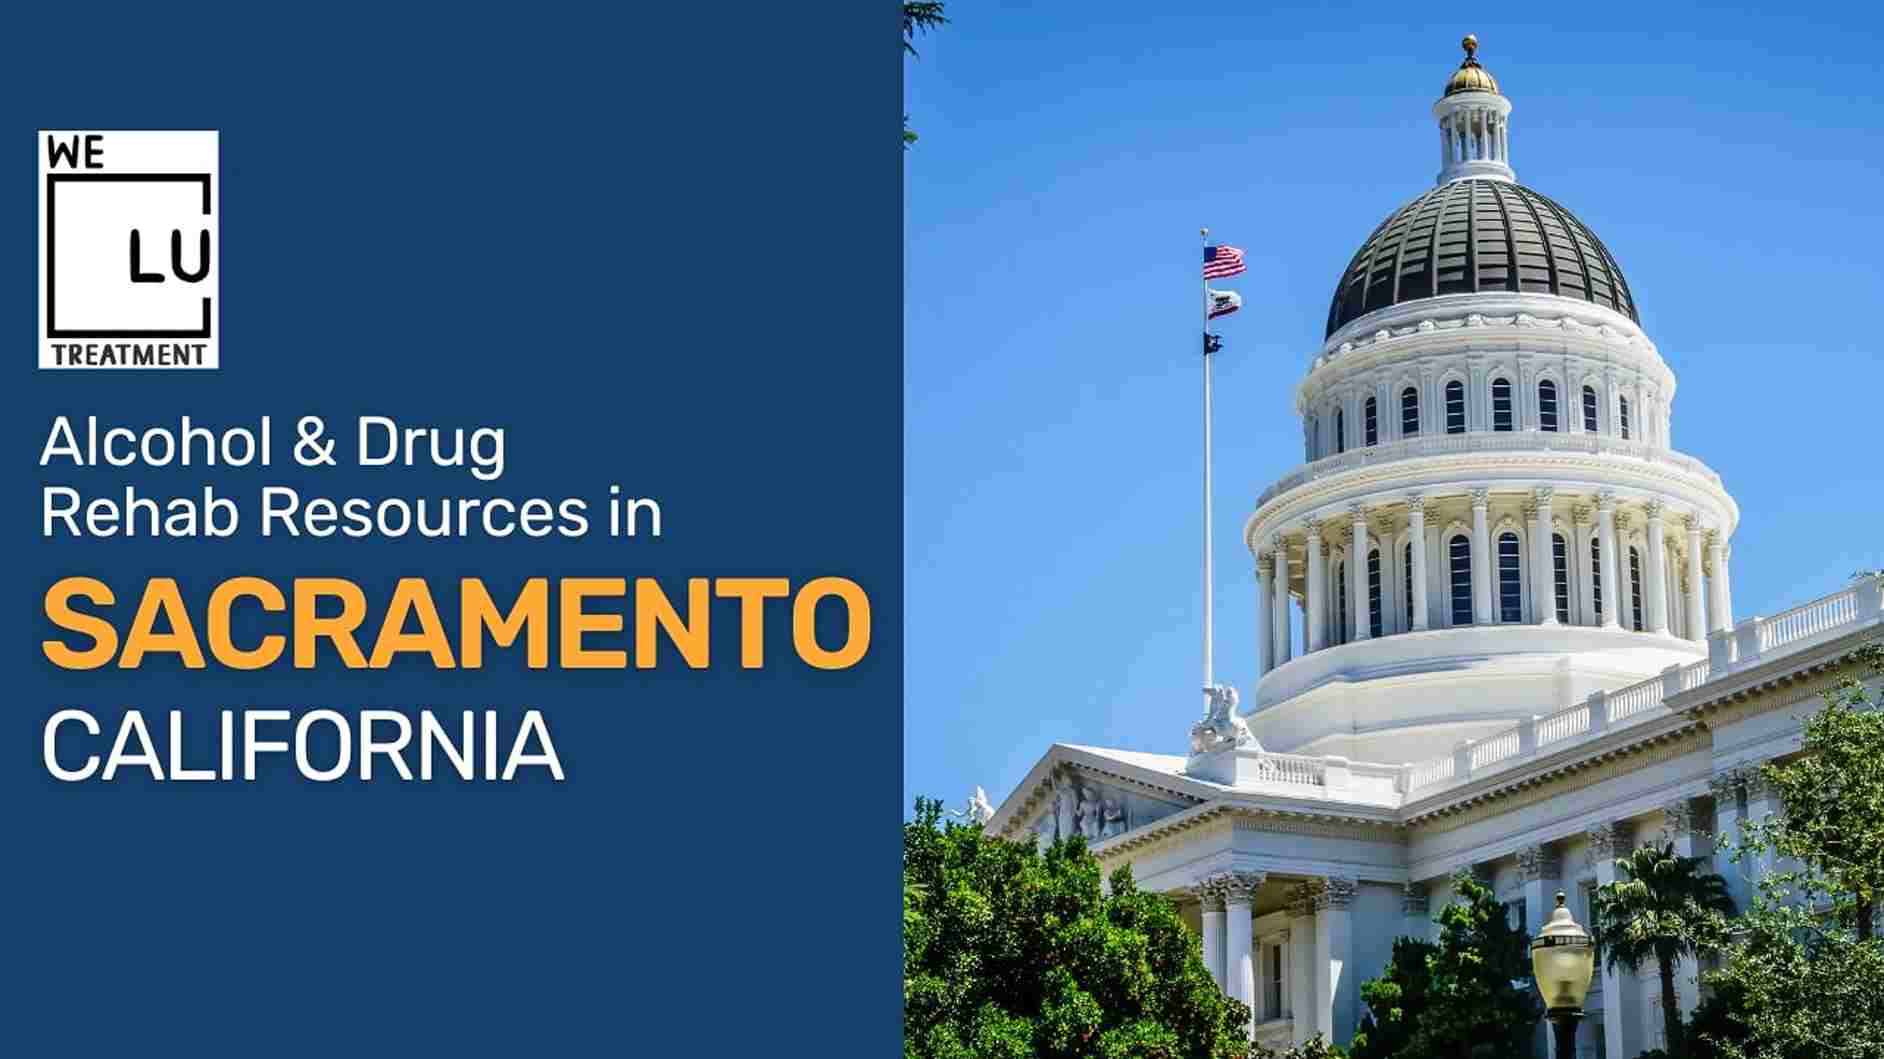 Sacramento CA We Level Up treatment center for drug and alcohol rehab detox and mental health services - Image 1